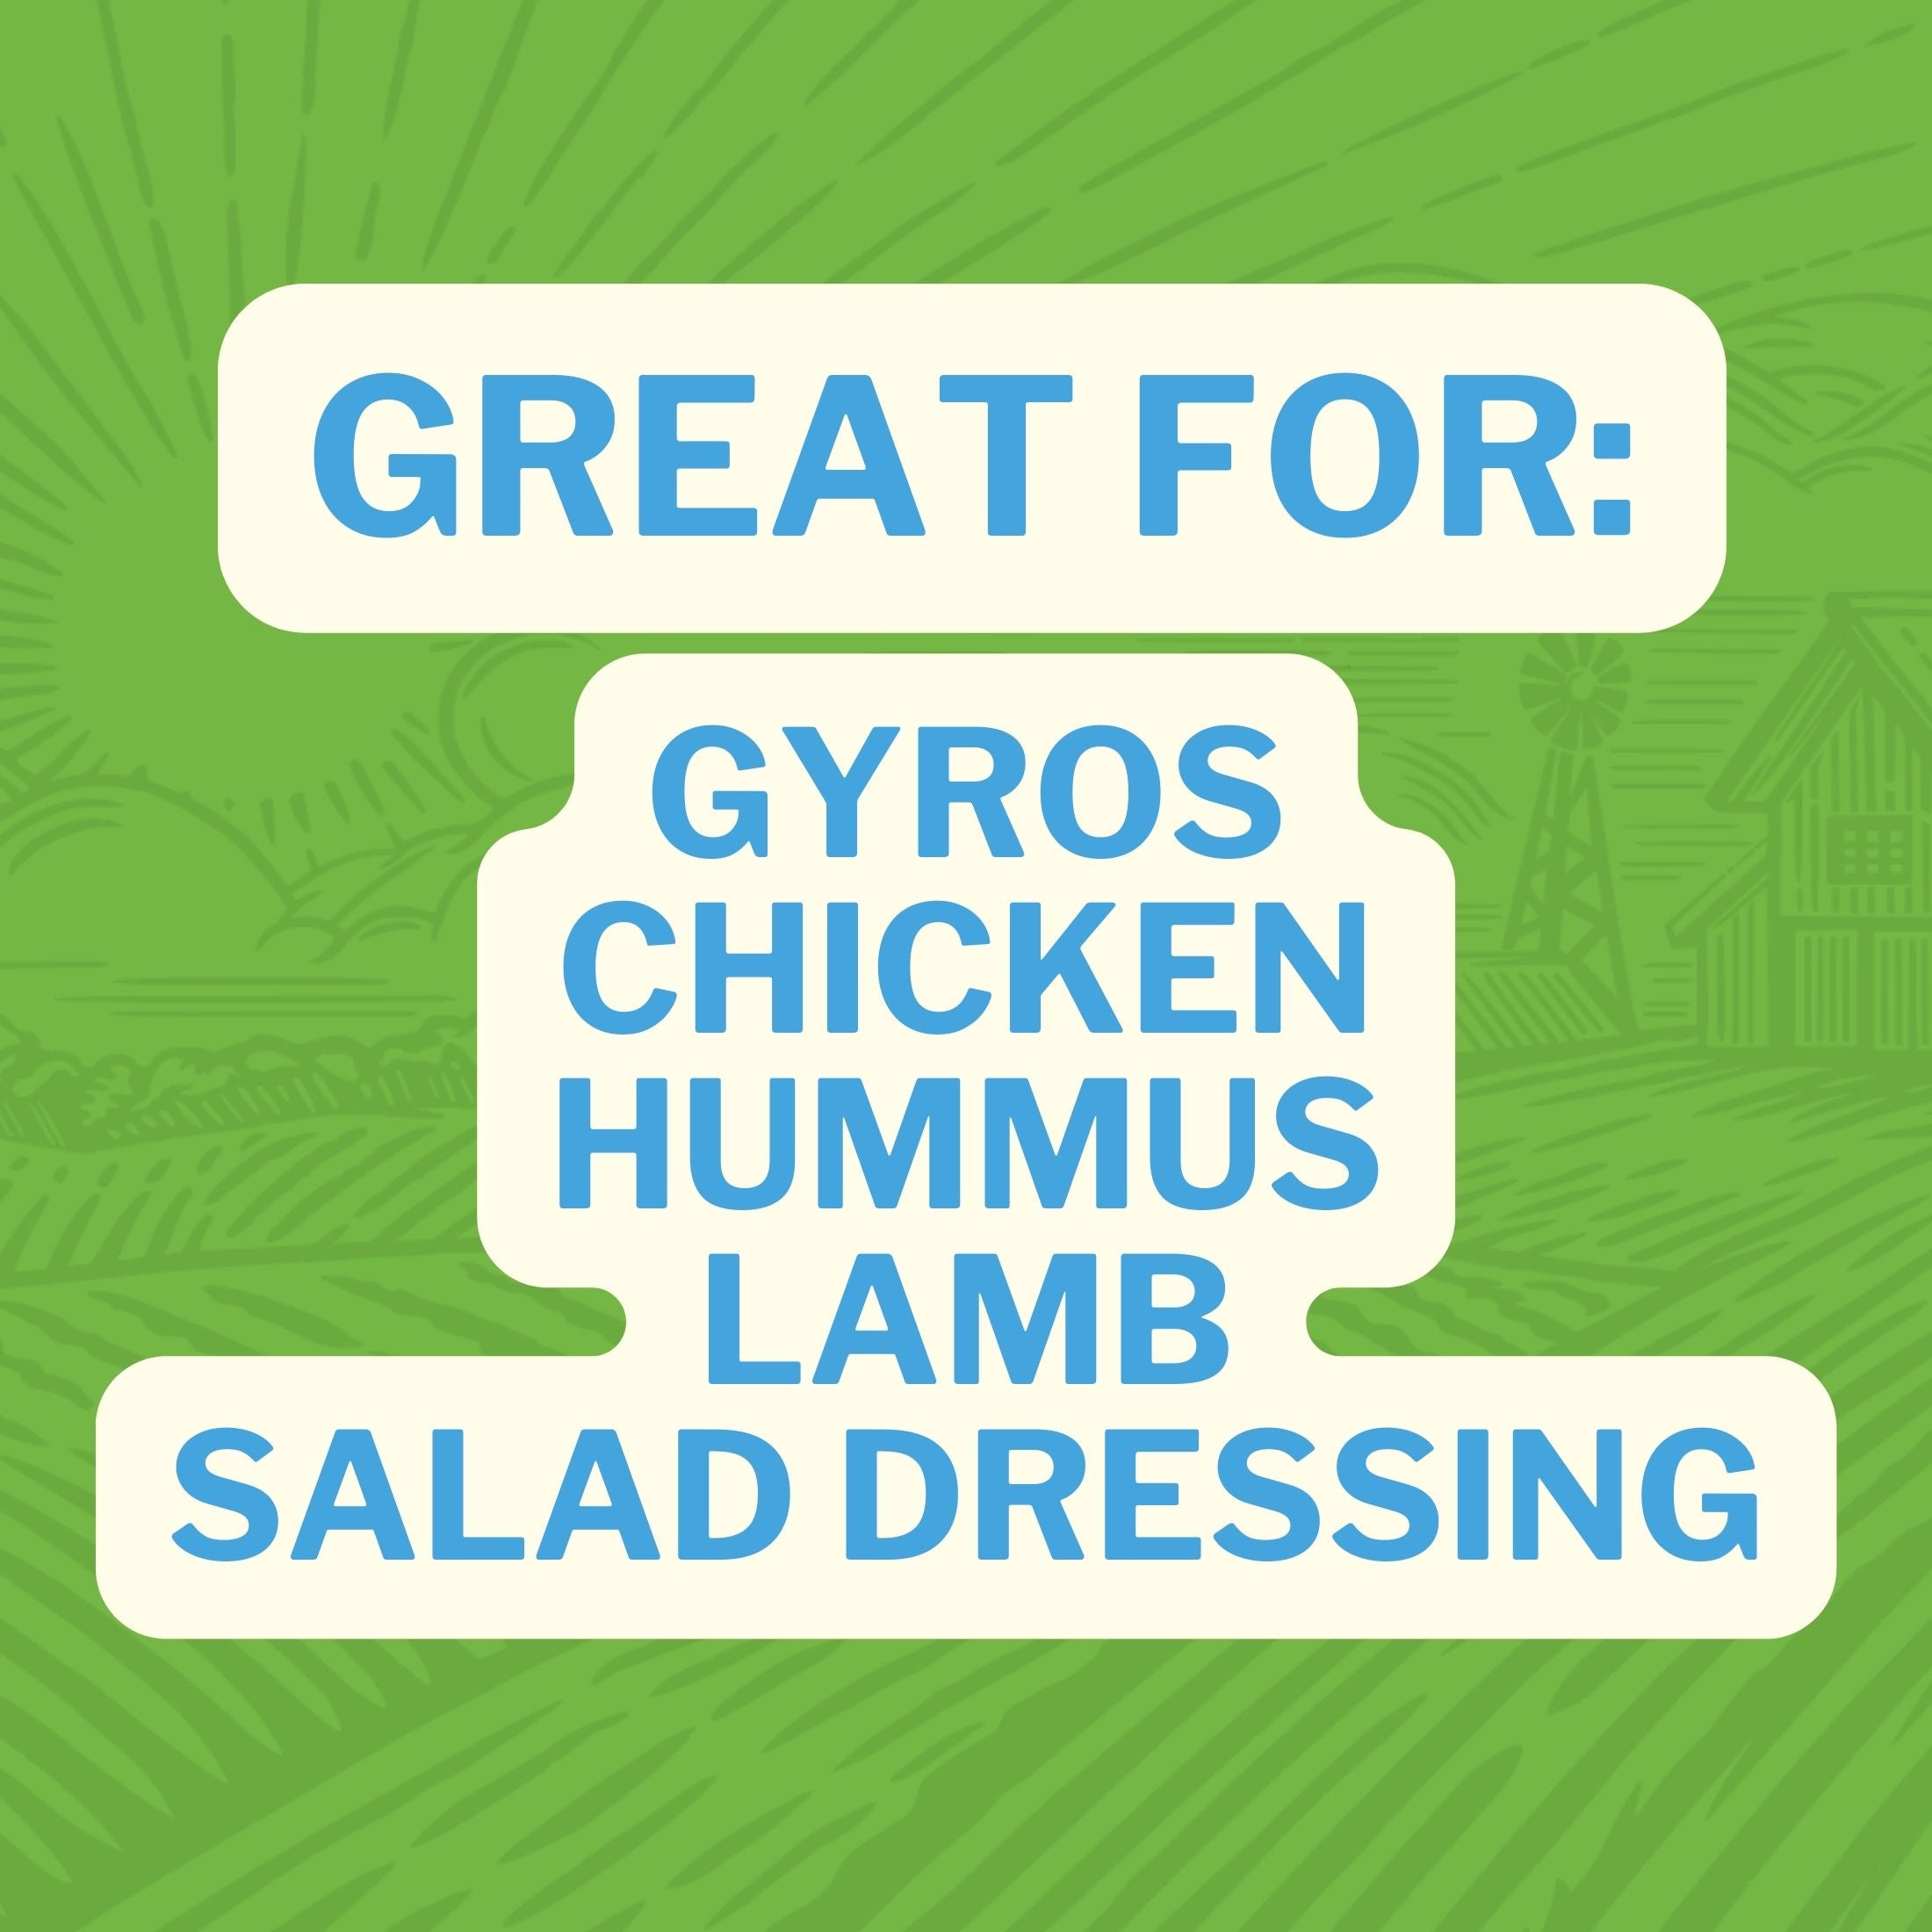 Great For: Gyros Chicken Hummus Lamb Salad Dressing